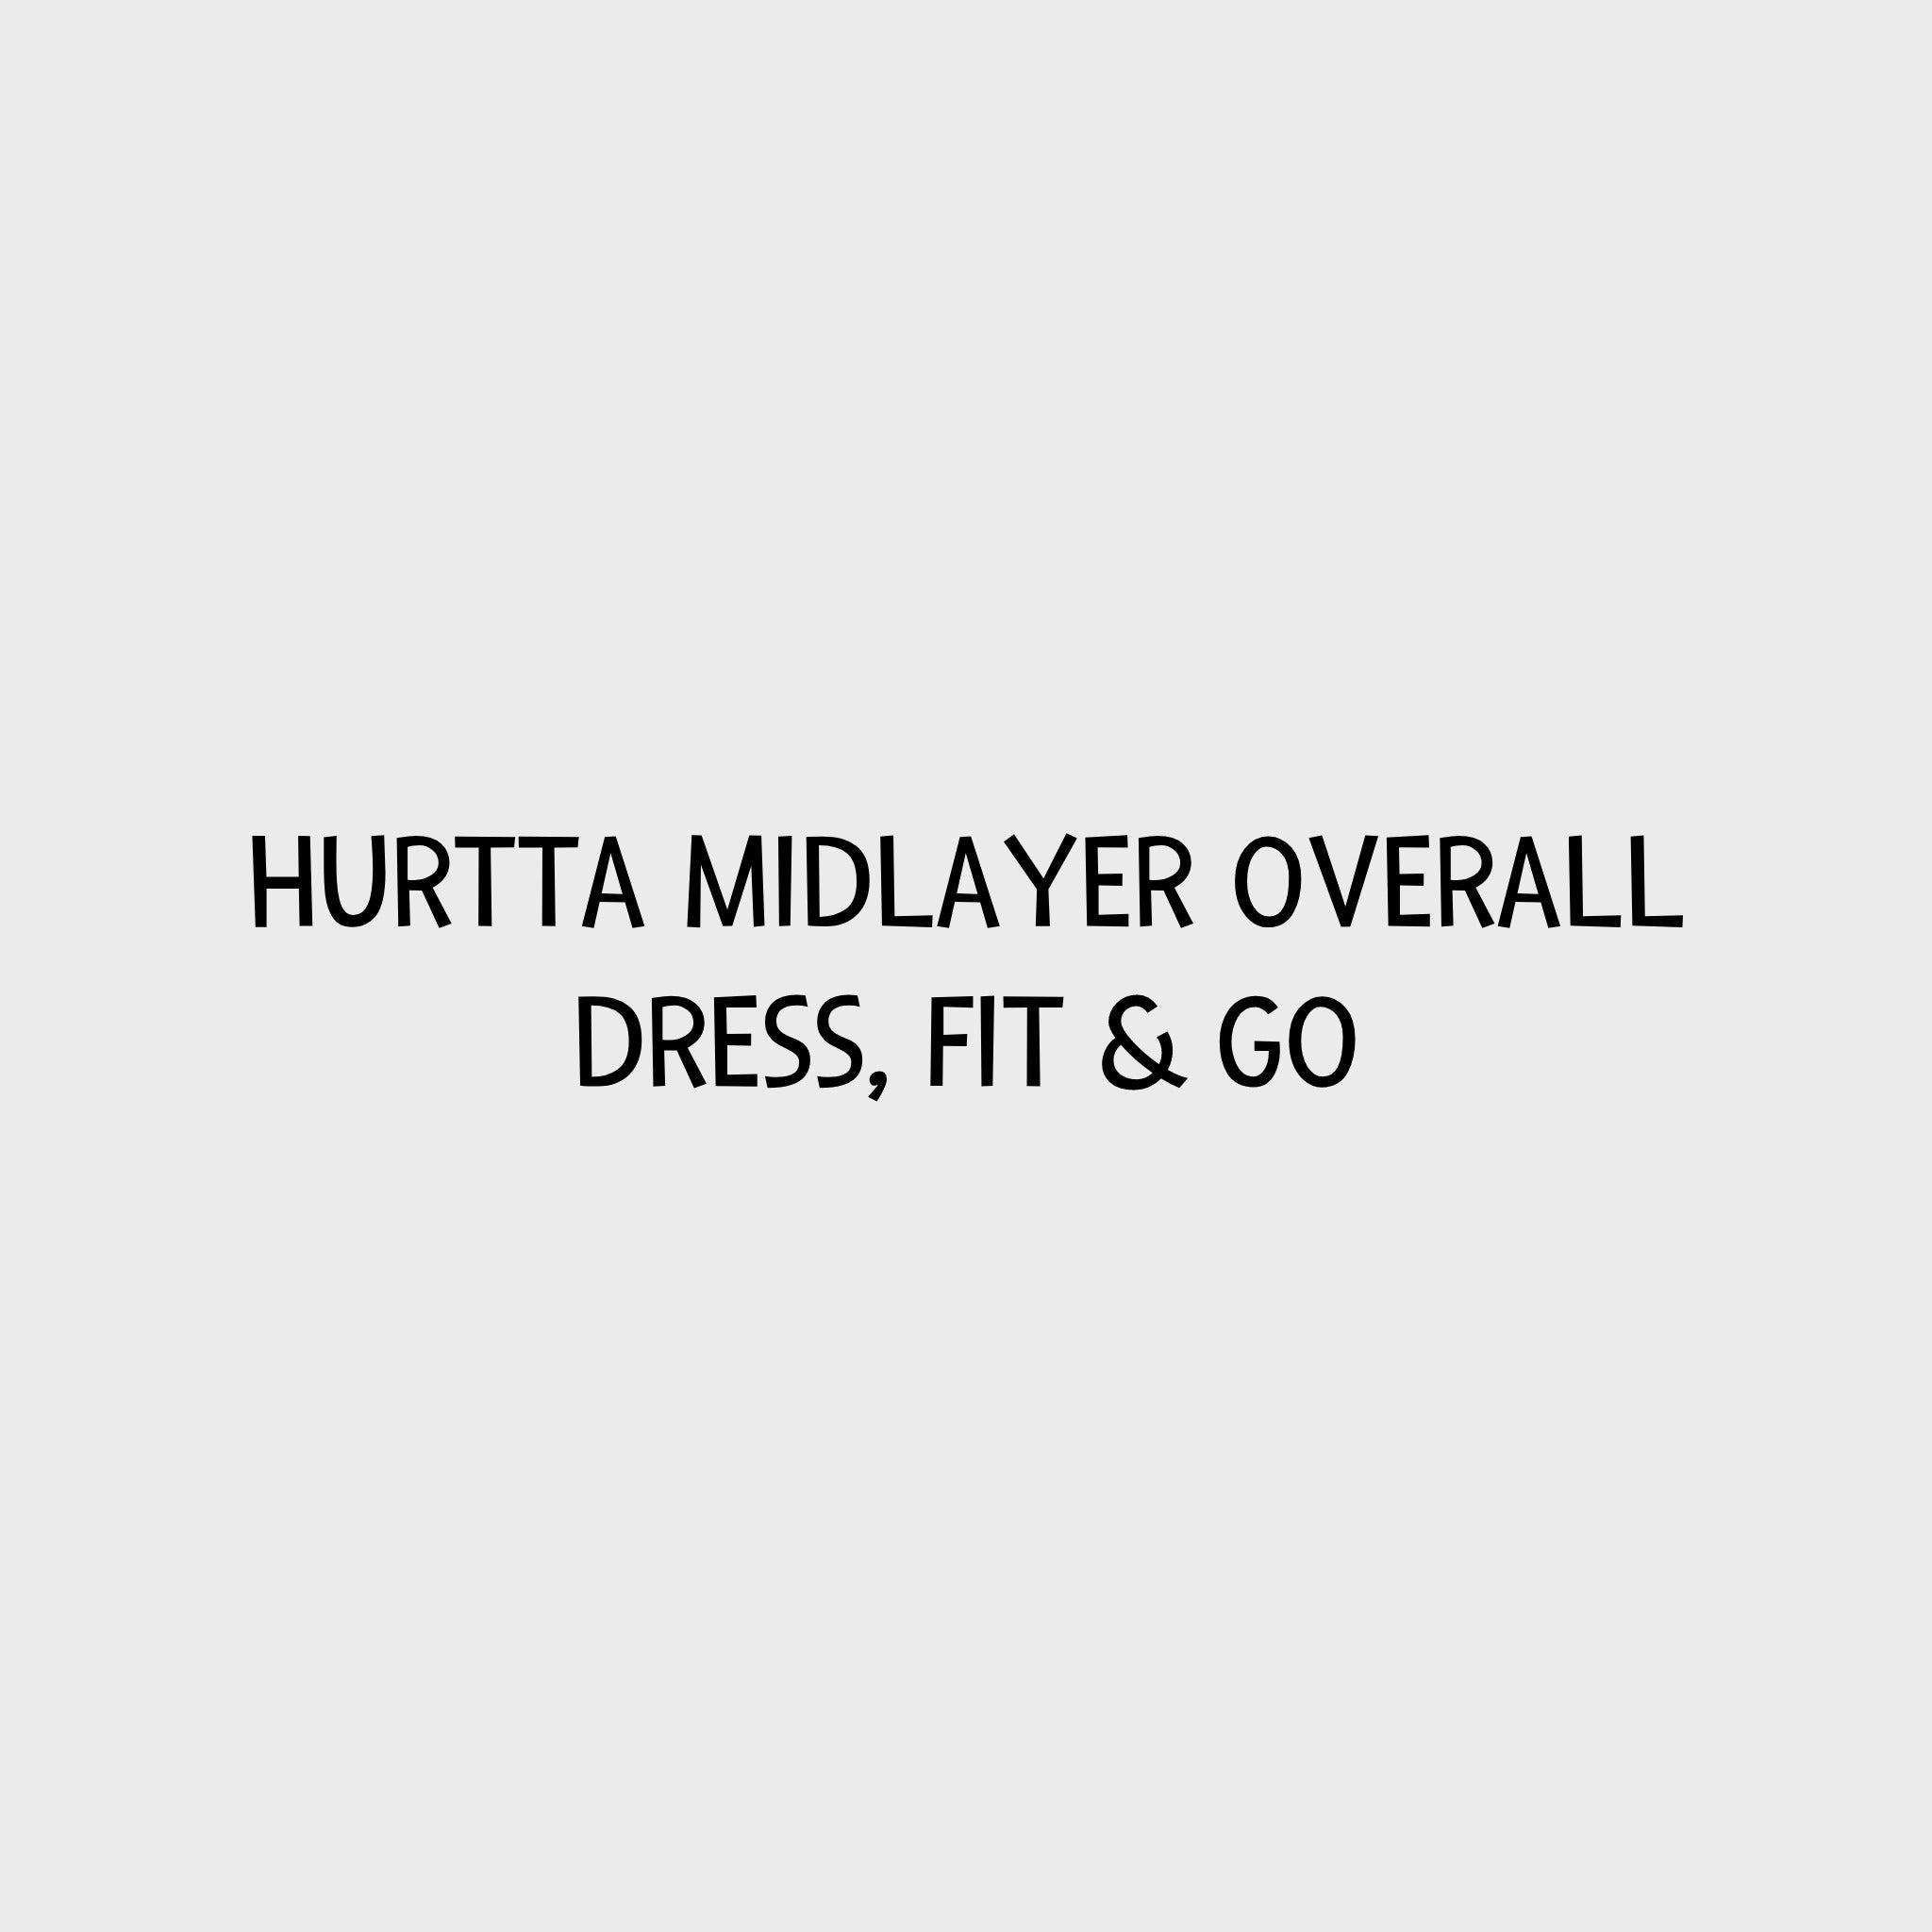 Video - Hurtta Midlayer Overall Dress, Fit & Go